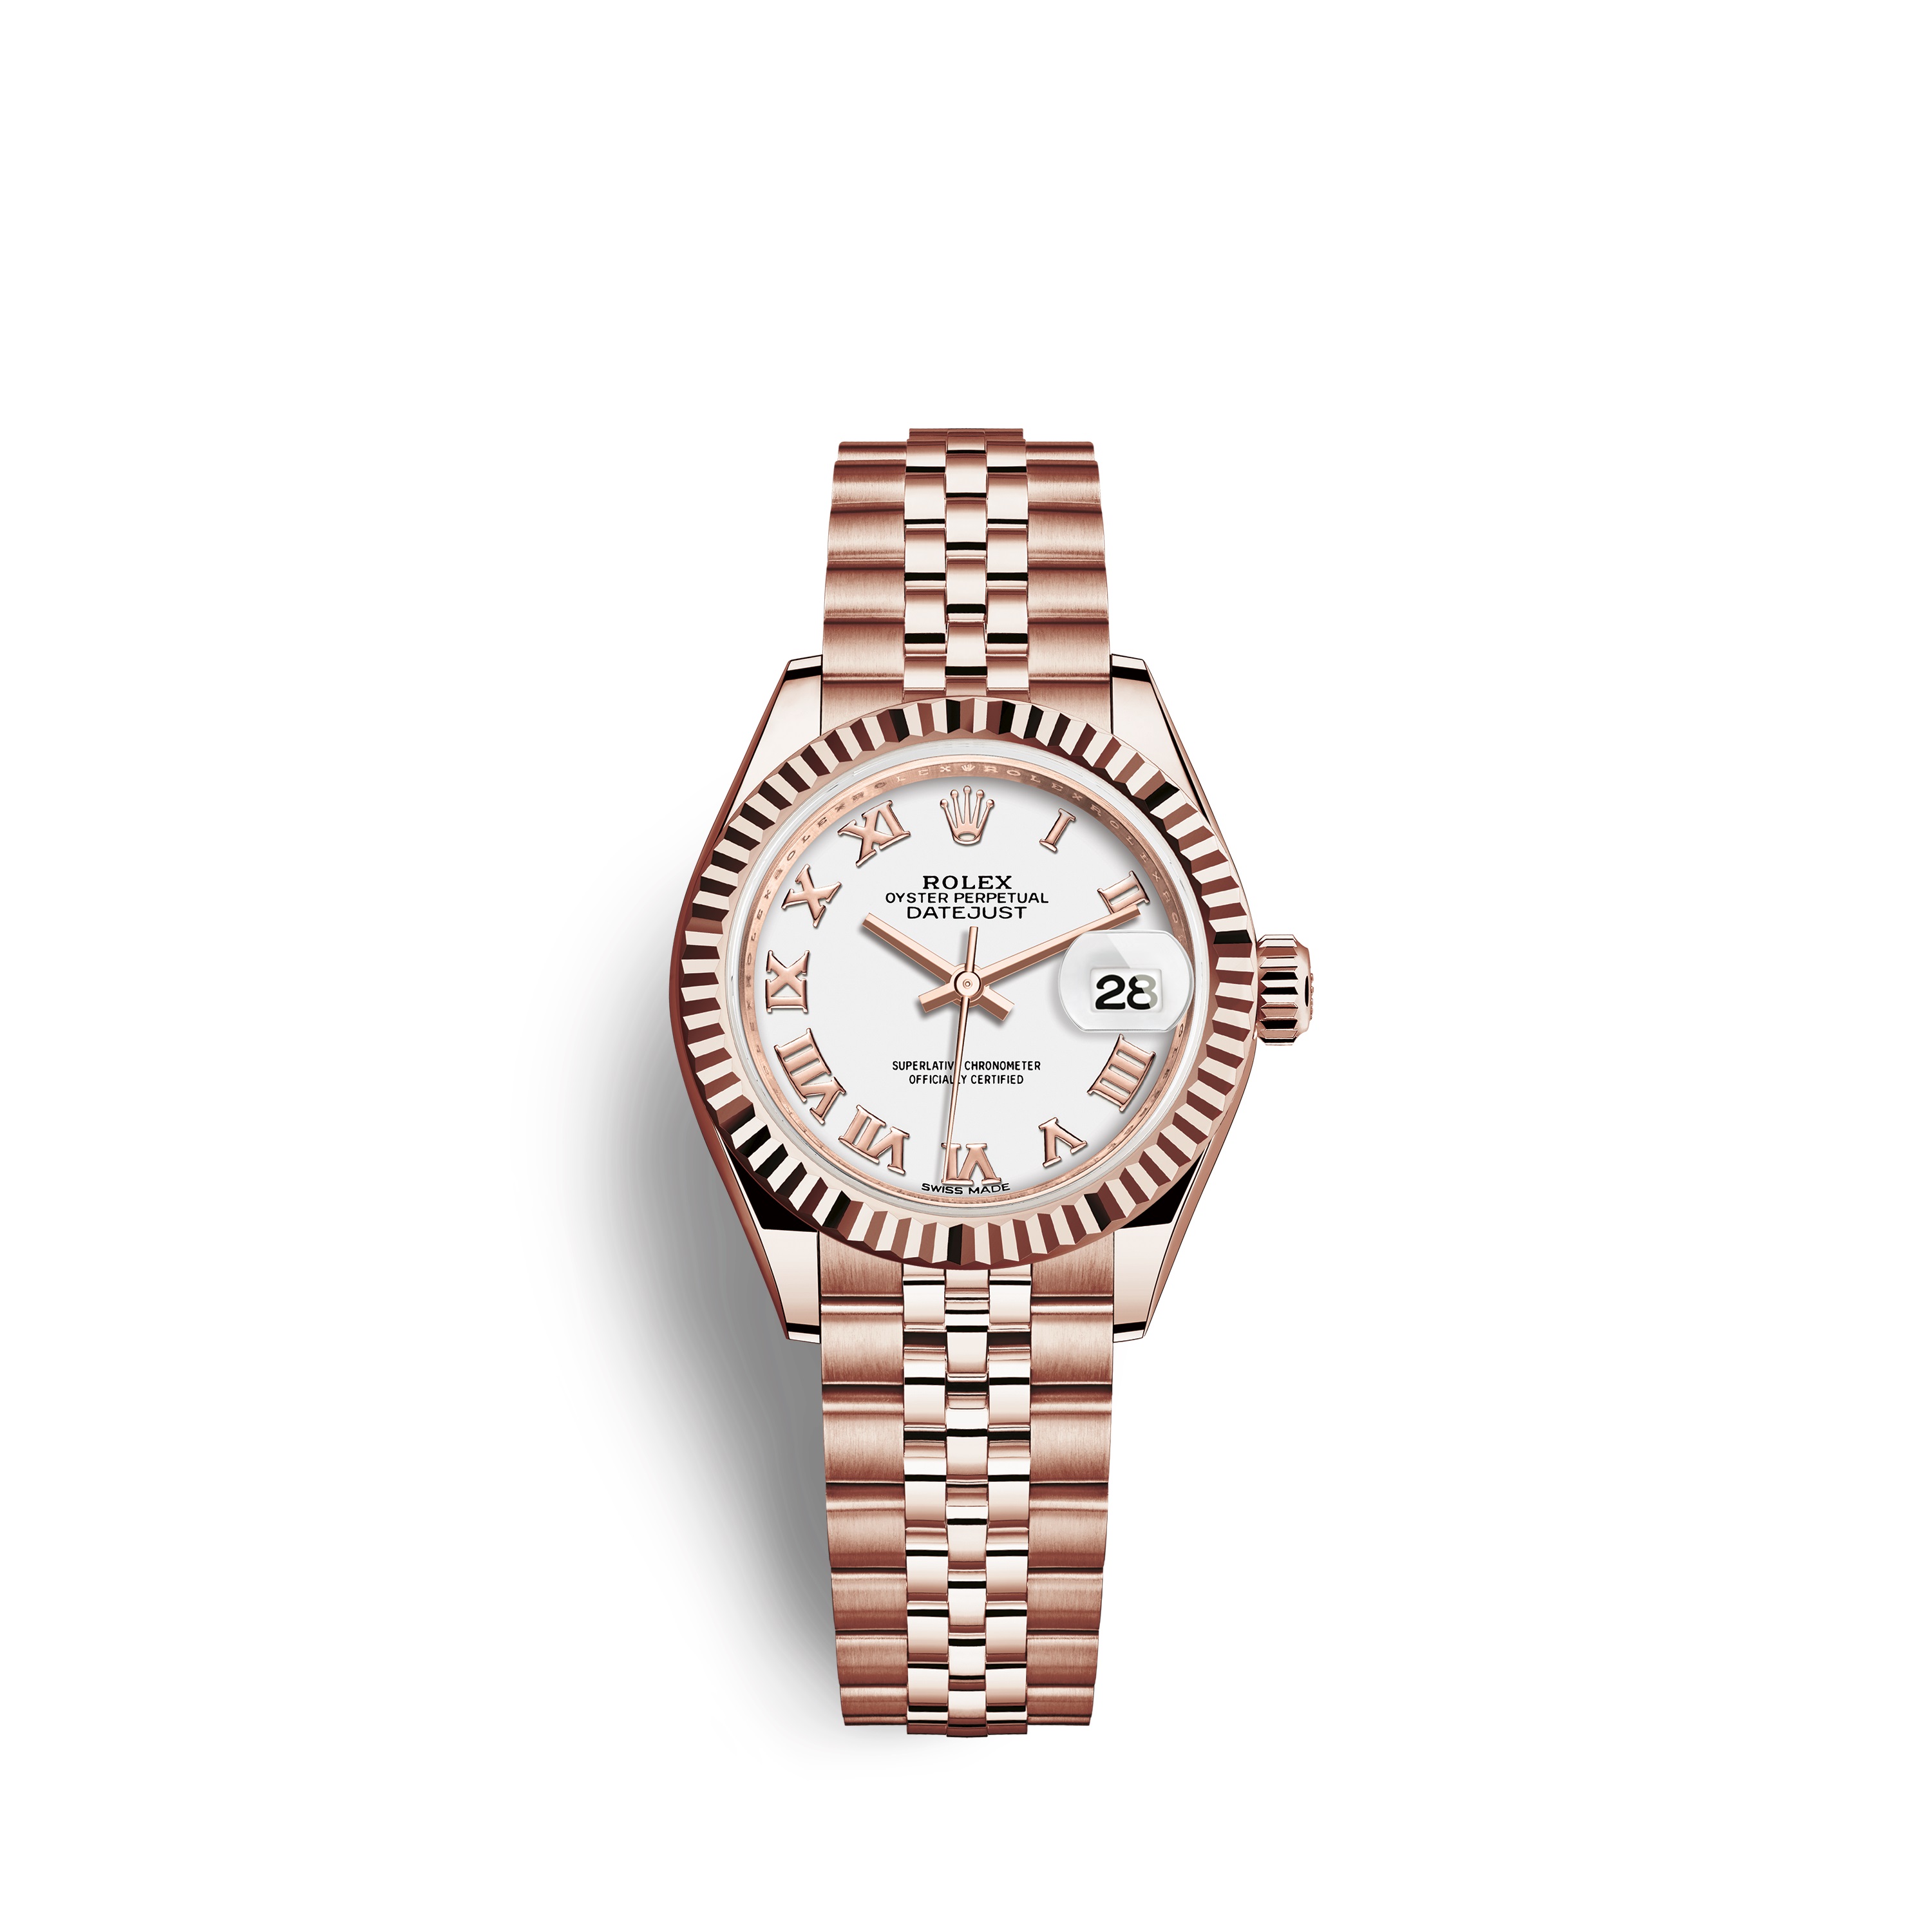 Lady-Datejust 28 279175 Rose Gold Watch (White)